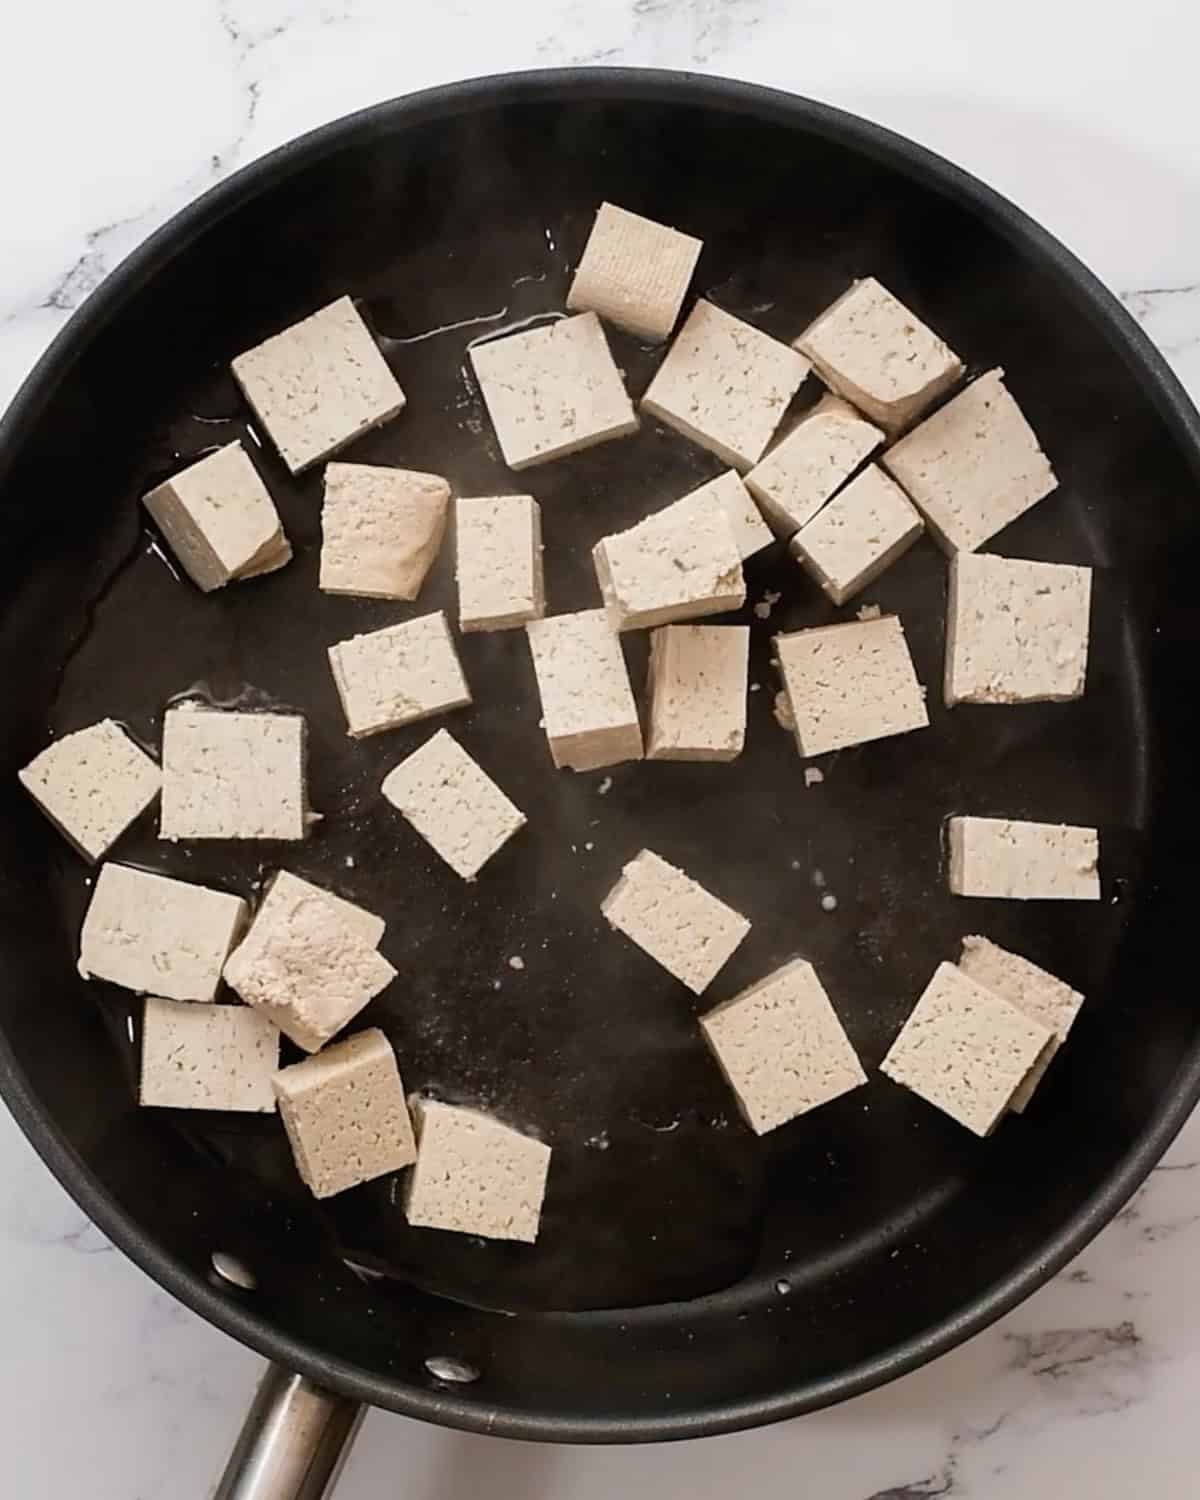 making Hoisin Tofu - cooking tofu in oil in a fry pan